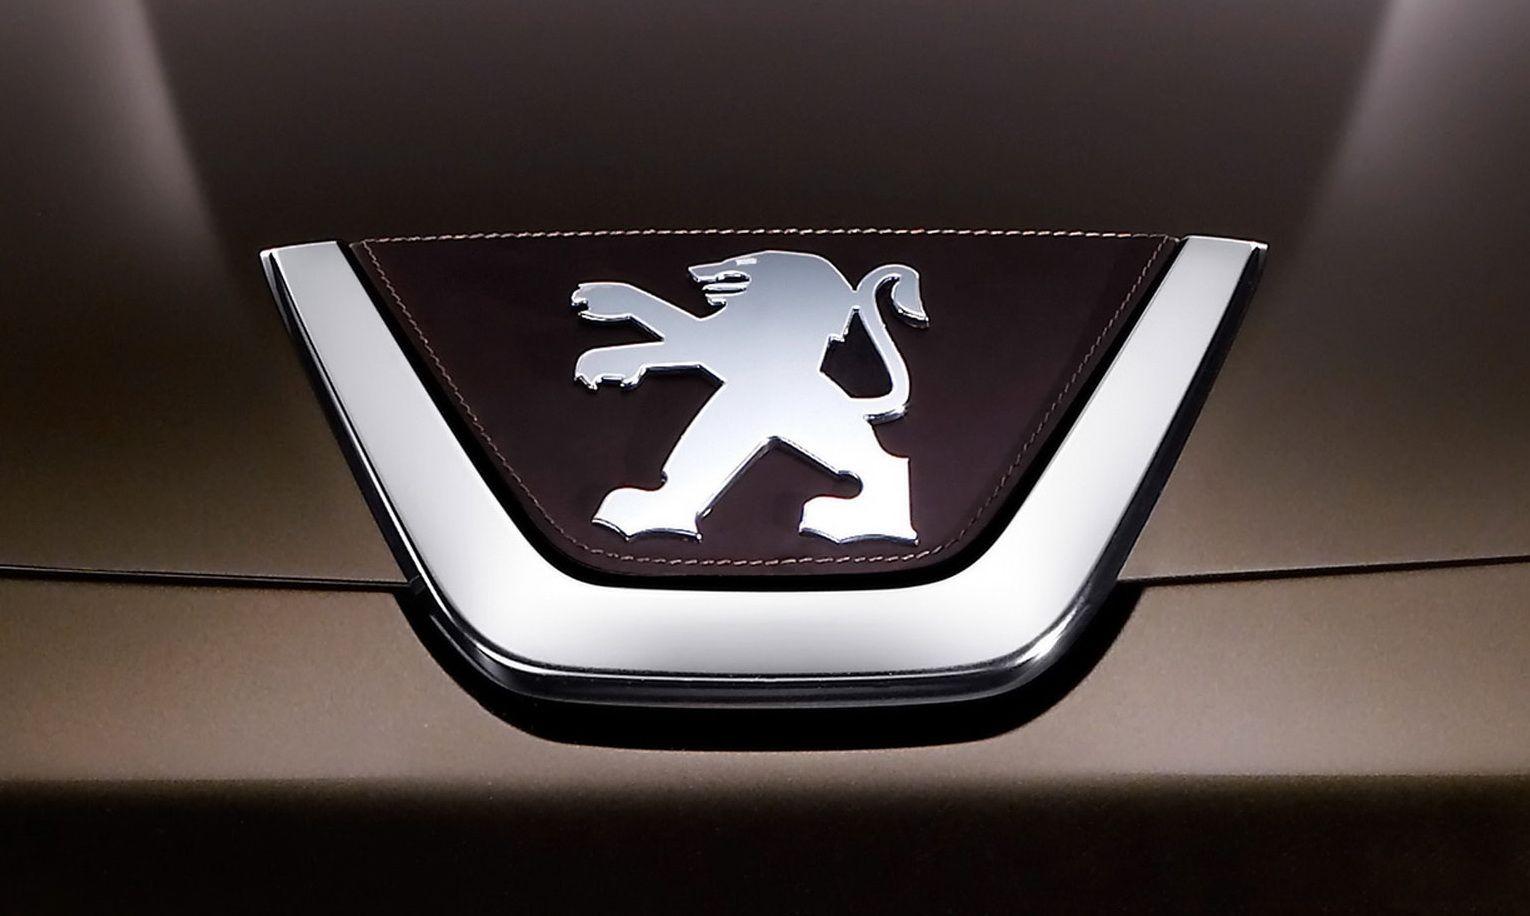 Auto Symbol Car Logo - Peugeot Logo, Peugeot Car Symbol Meaning and History | Car Brand ...